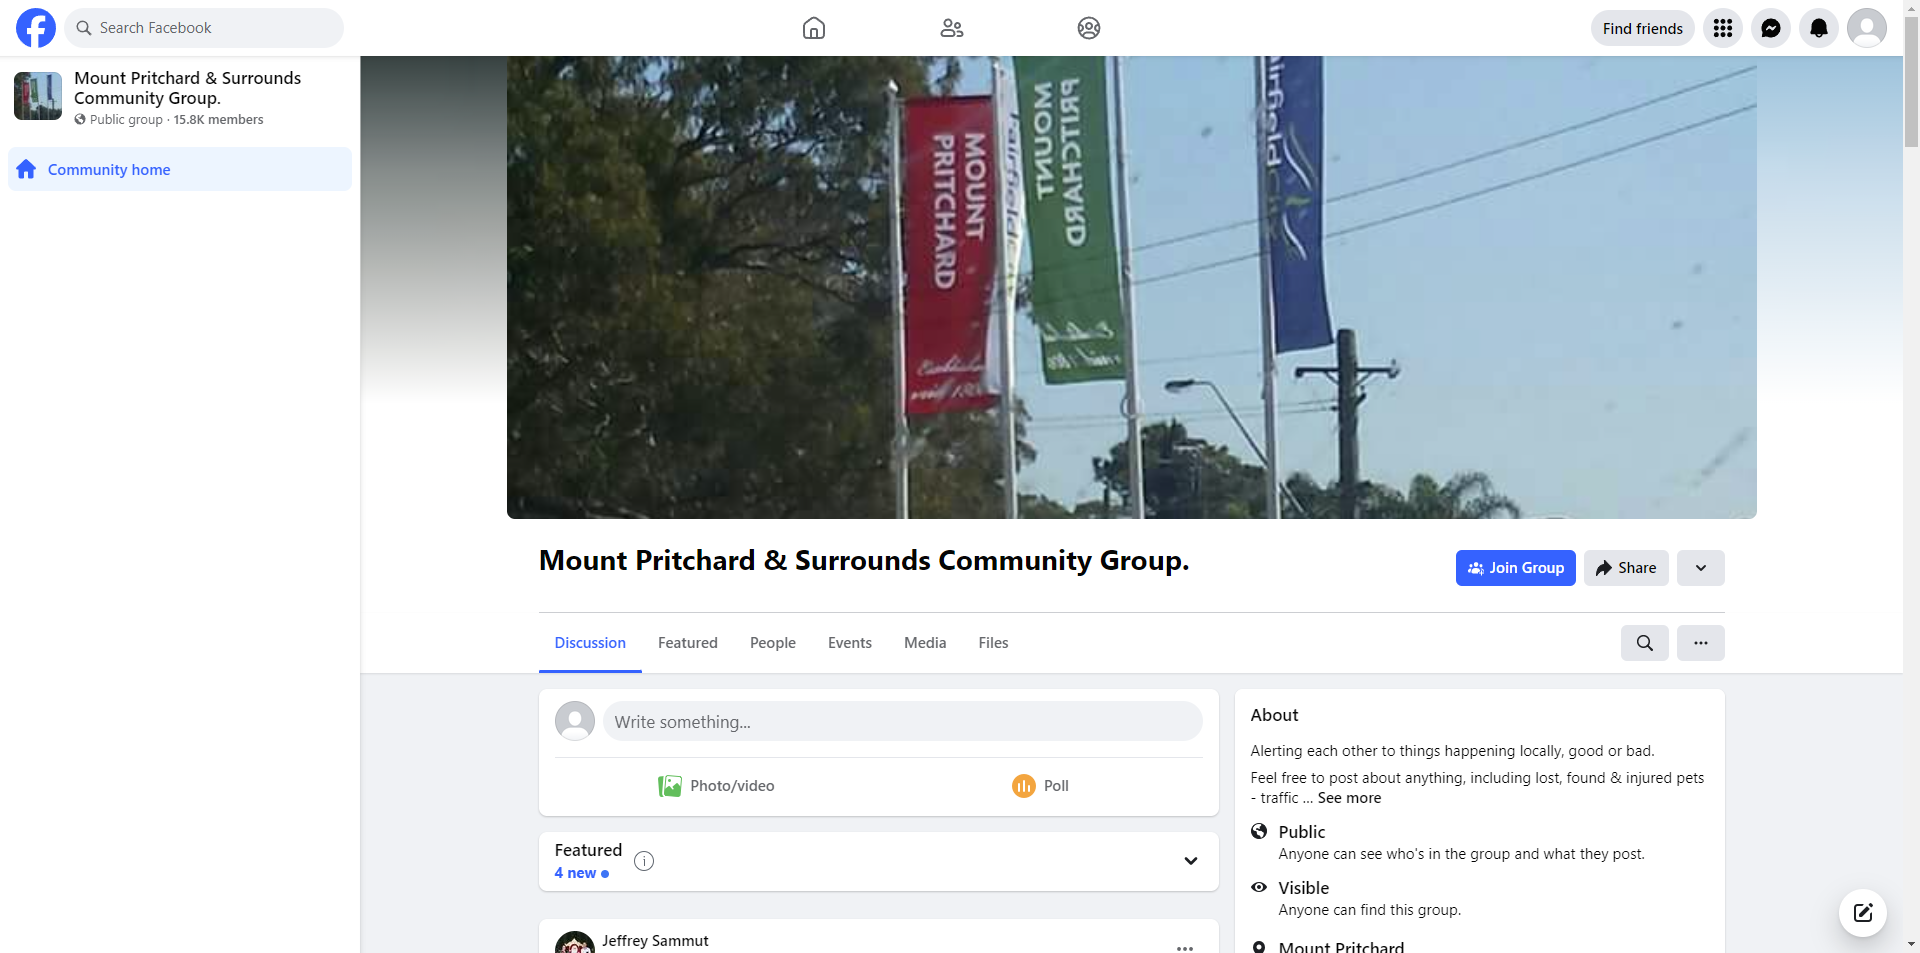 Mount Pritchard & Surrounds Community Group